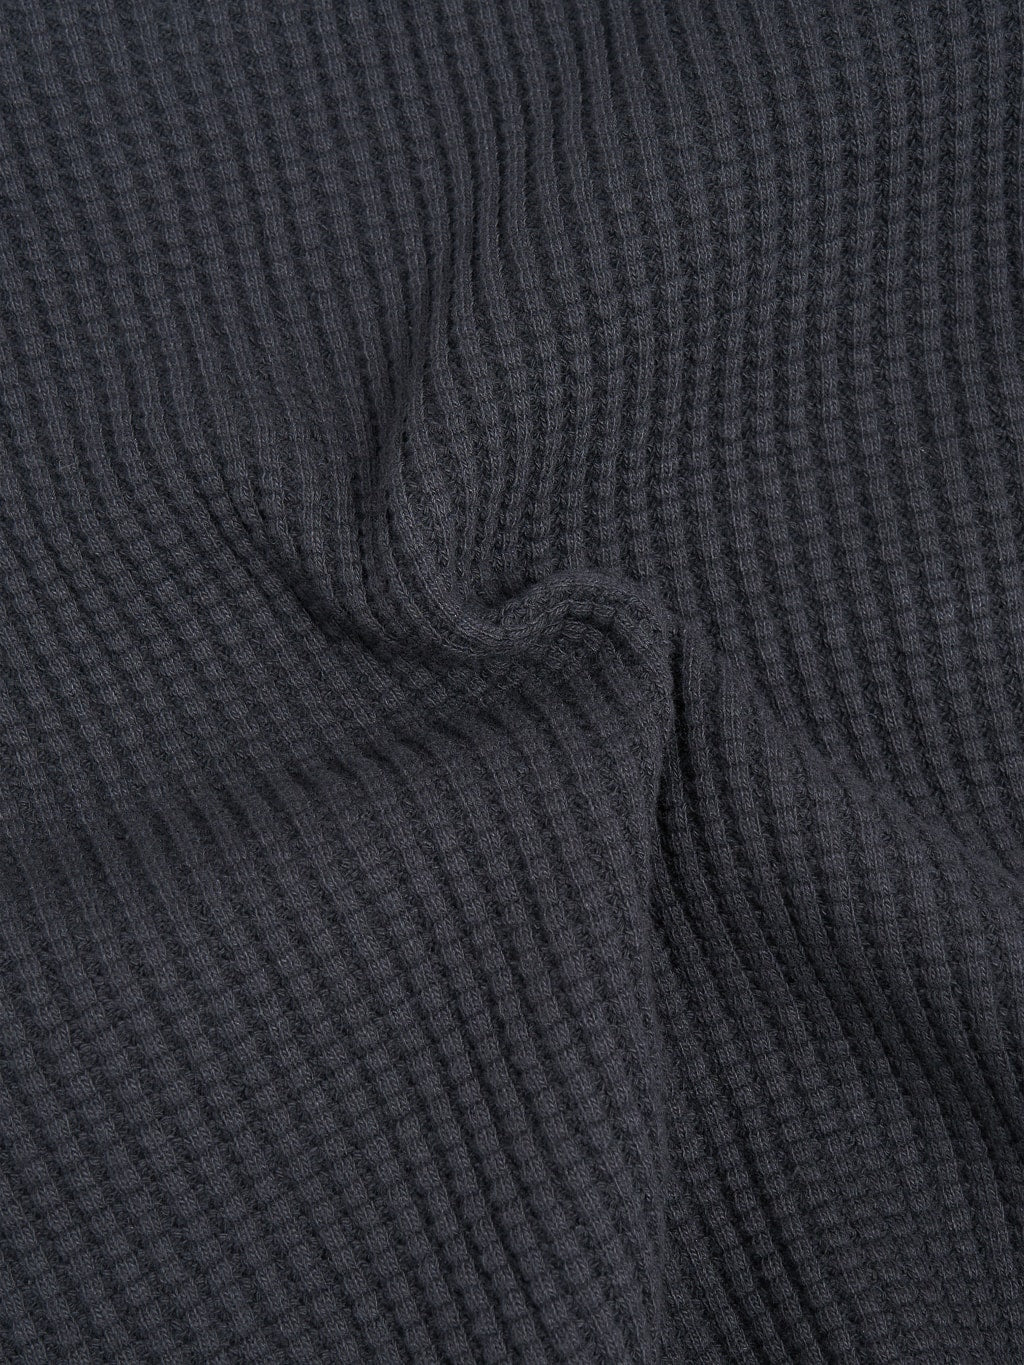 UES Thermal Big Waffle Tshirt black fabric texture